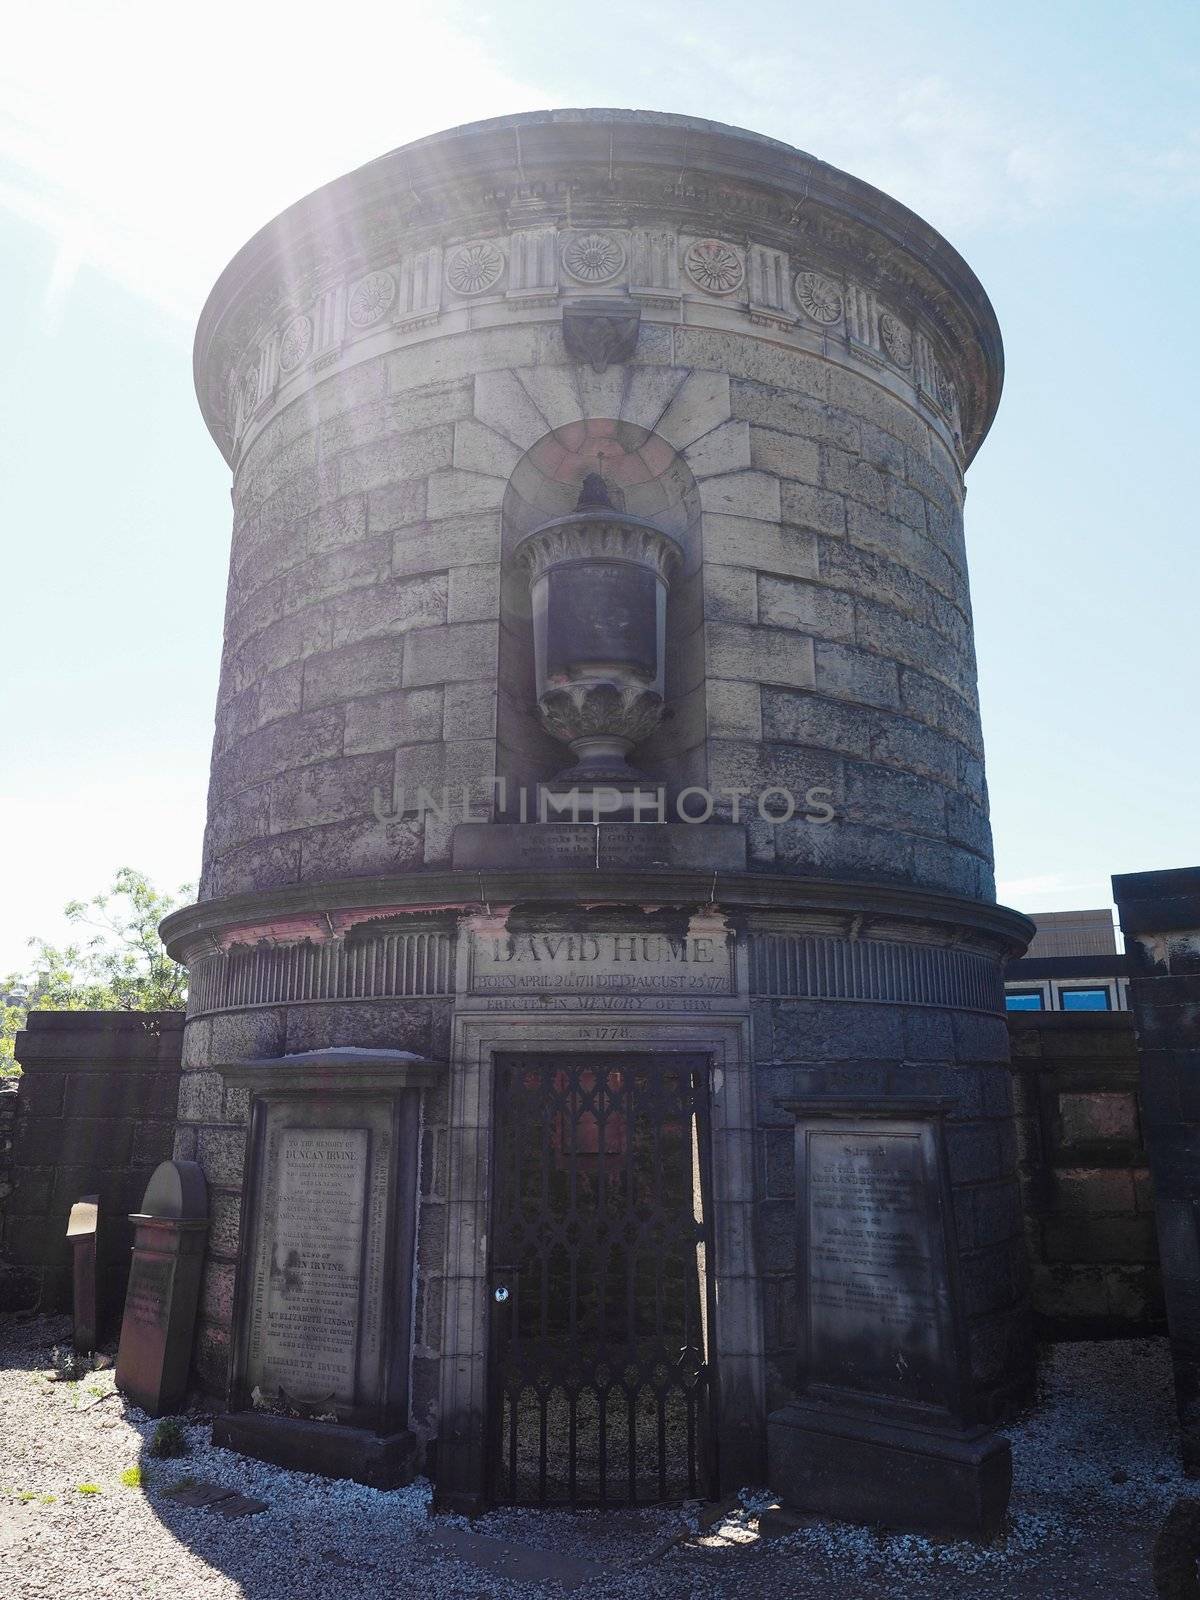 David Hume mausoleum in Edinburgh by claudiodivizia